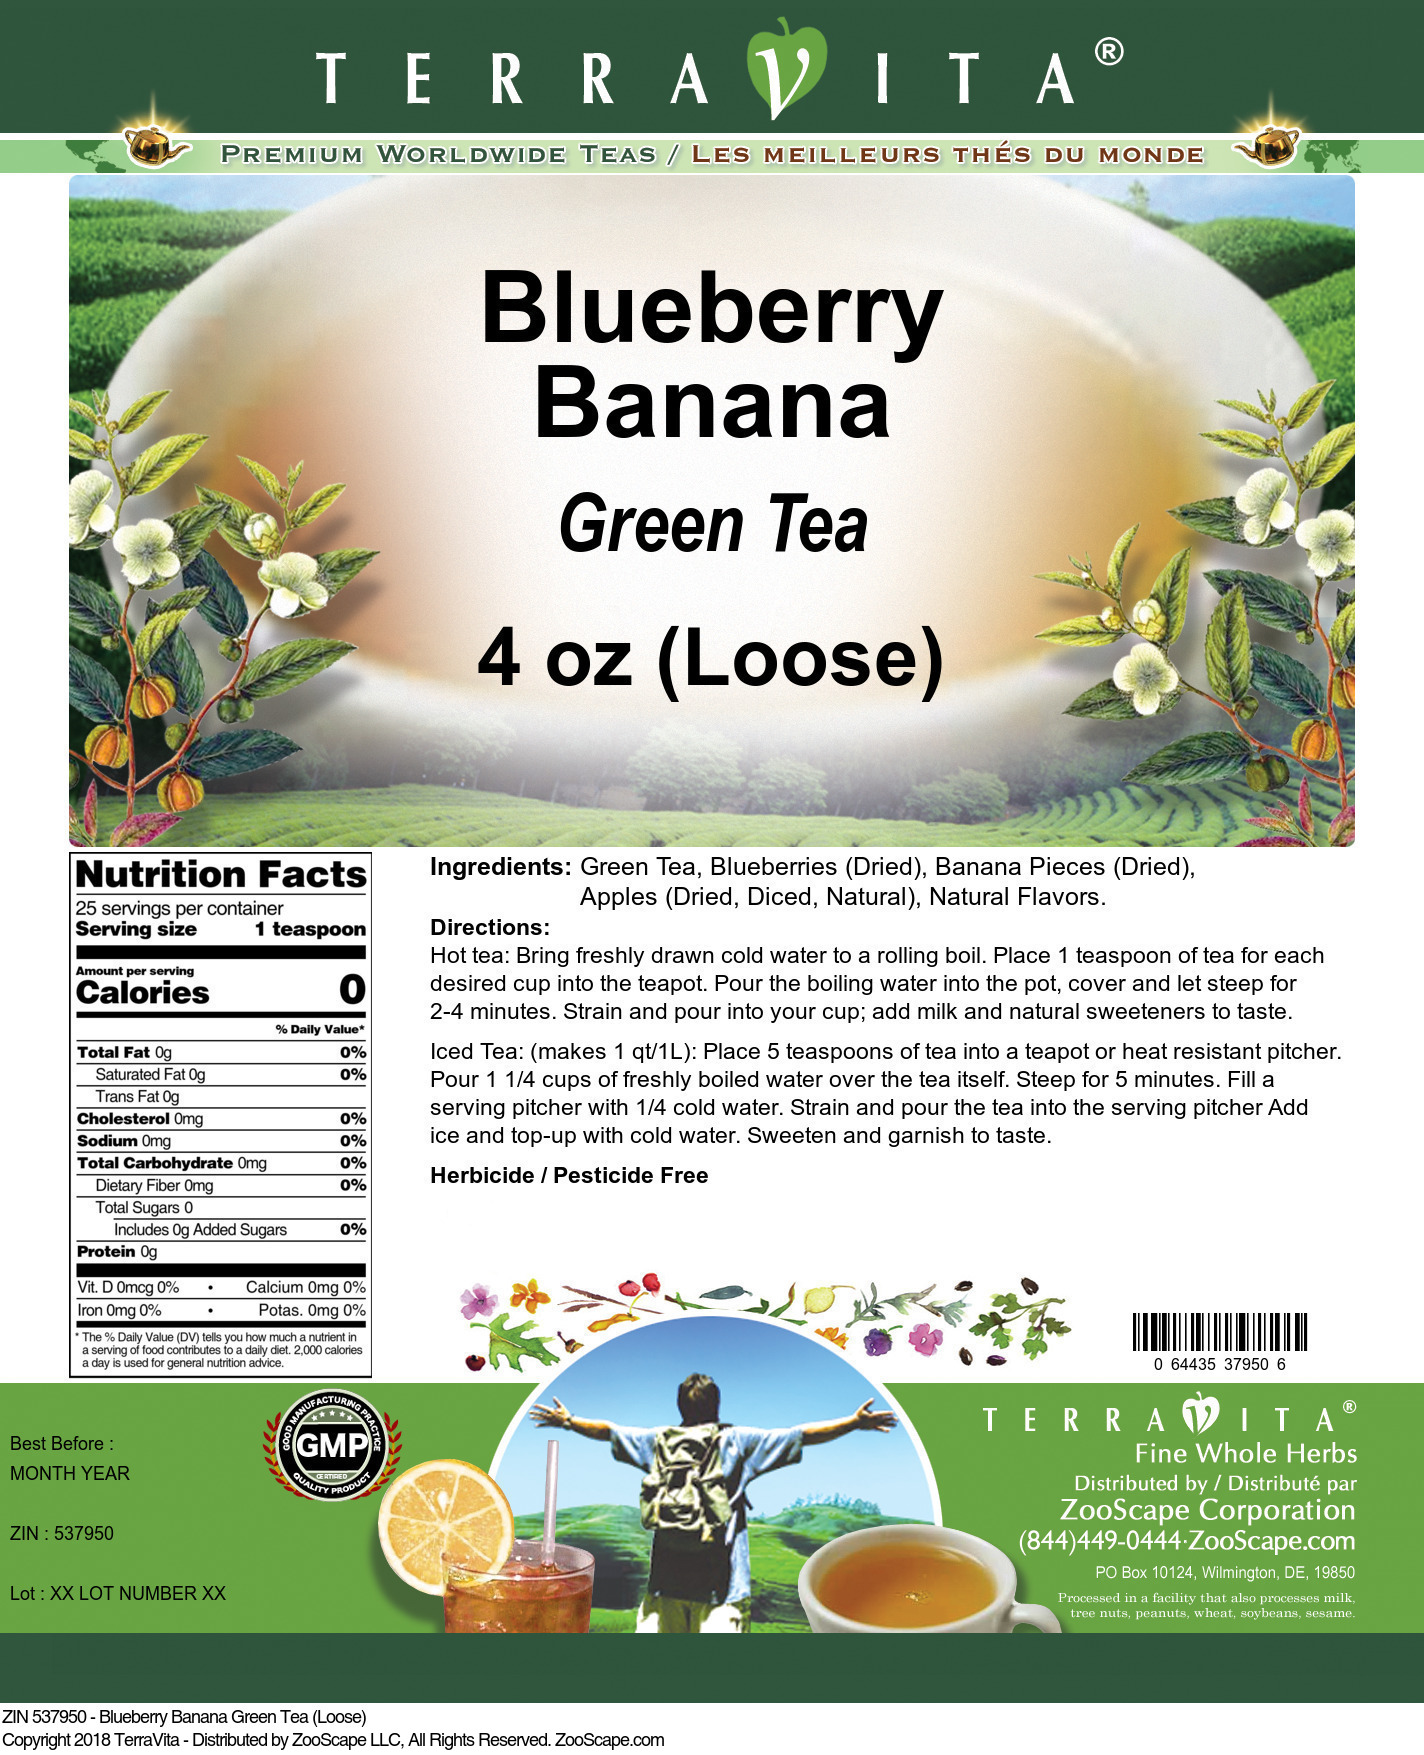 Blueberry Banana Green Tea (Loose) - Label